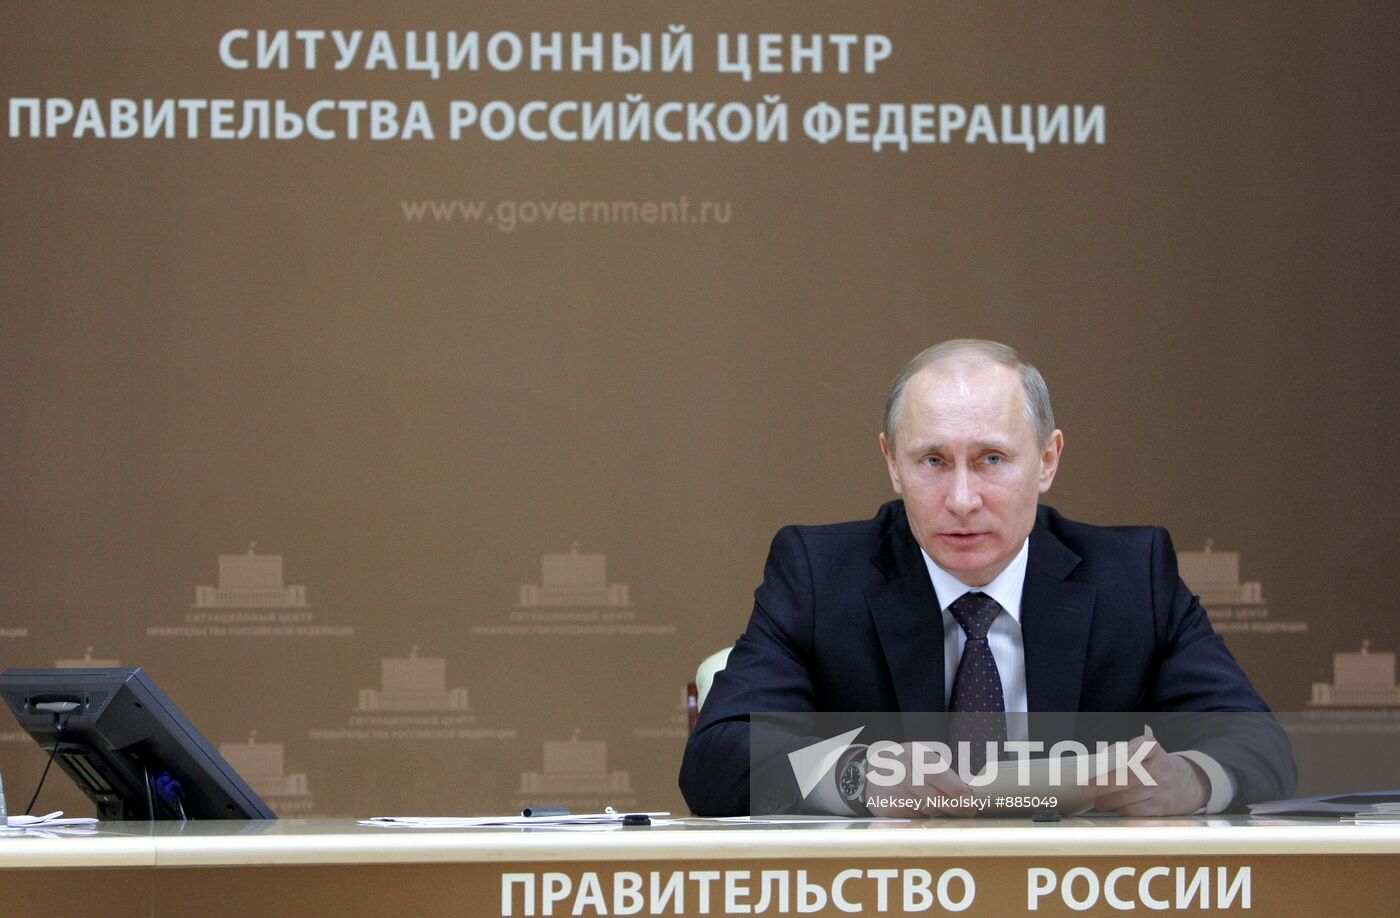 Vladimir Putin chairs teleconference